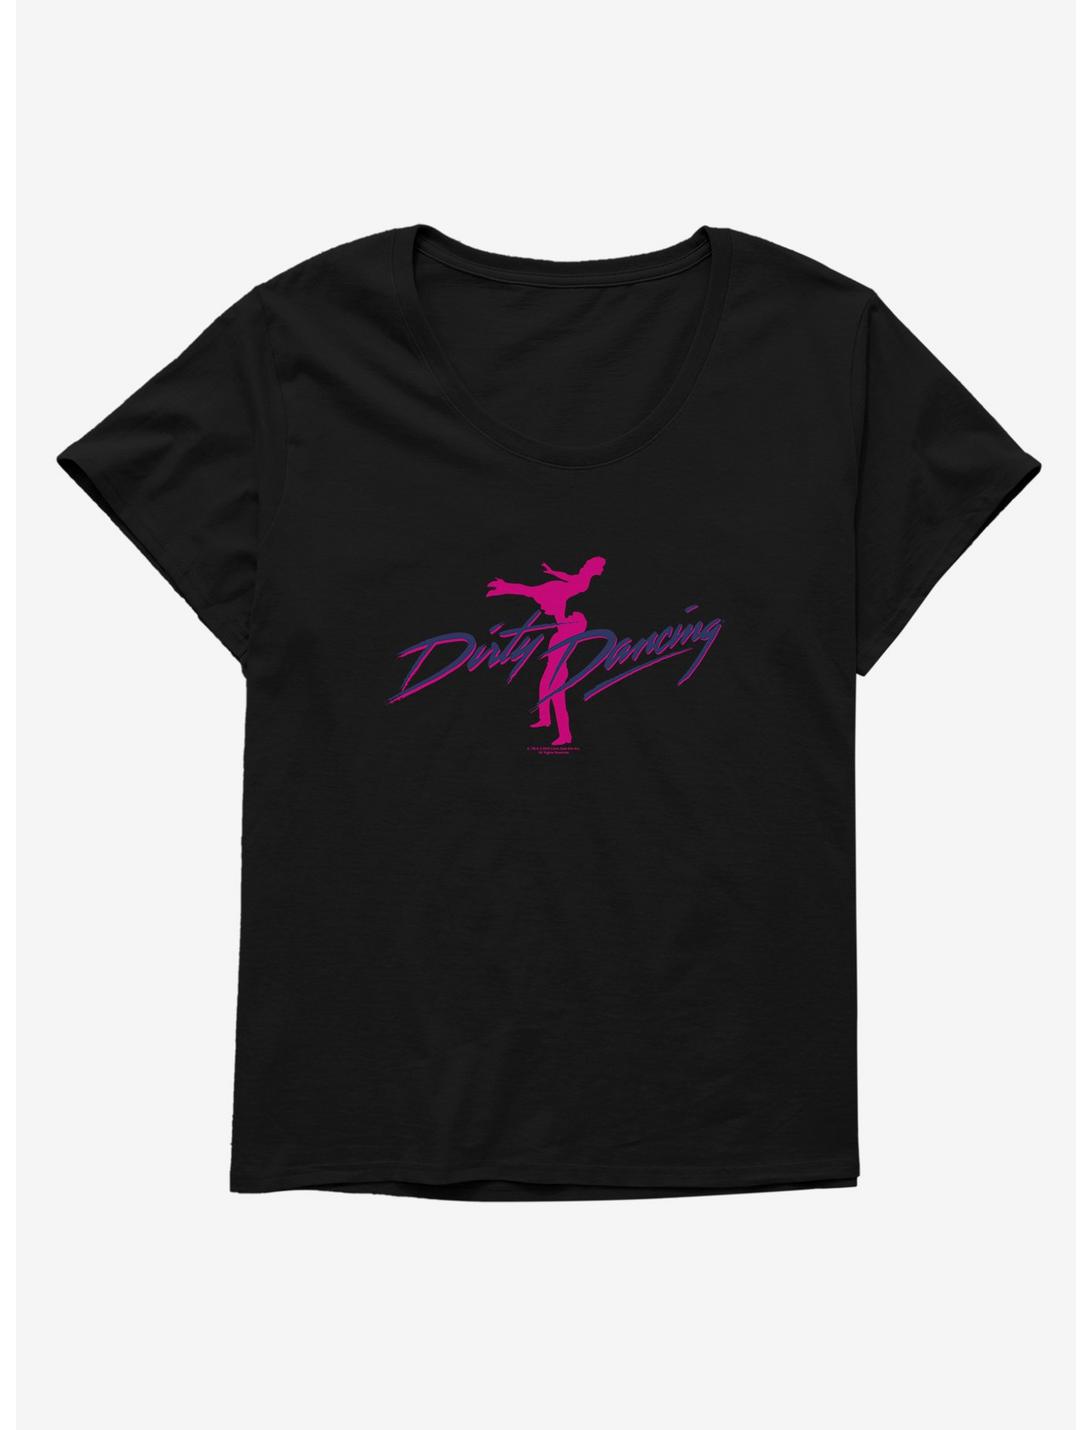 Dirty Dancing Lift Silohouette Womens T-Shirt Plus Size, , hi-res